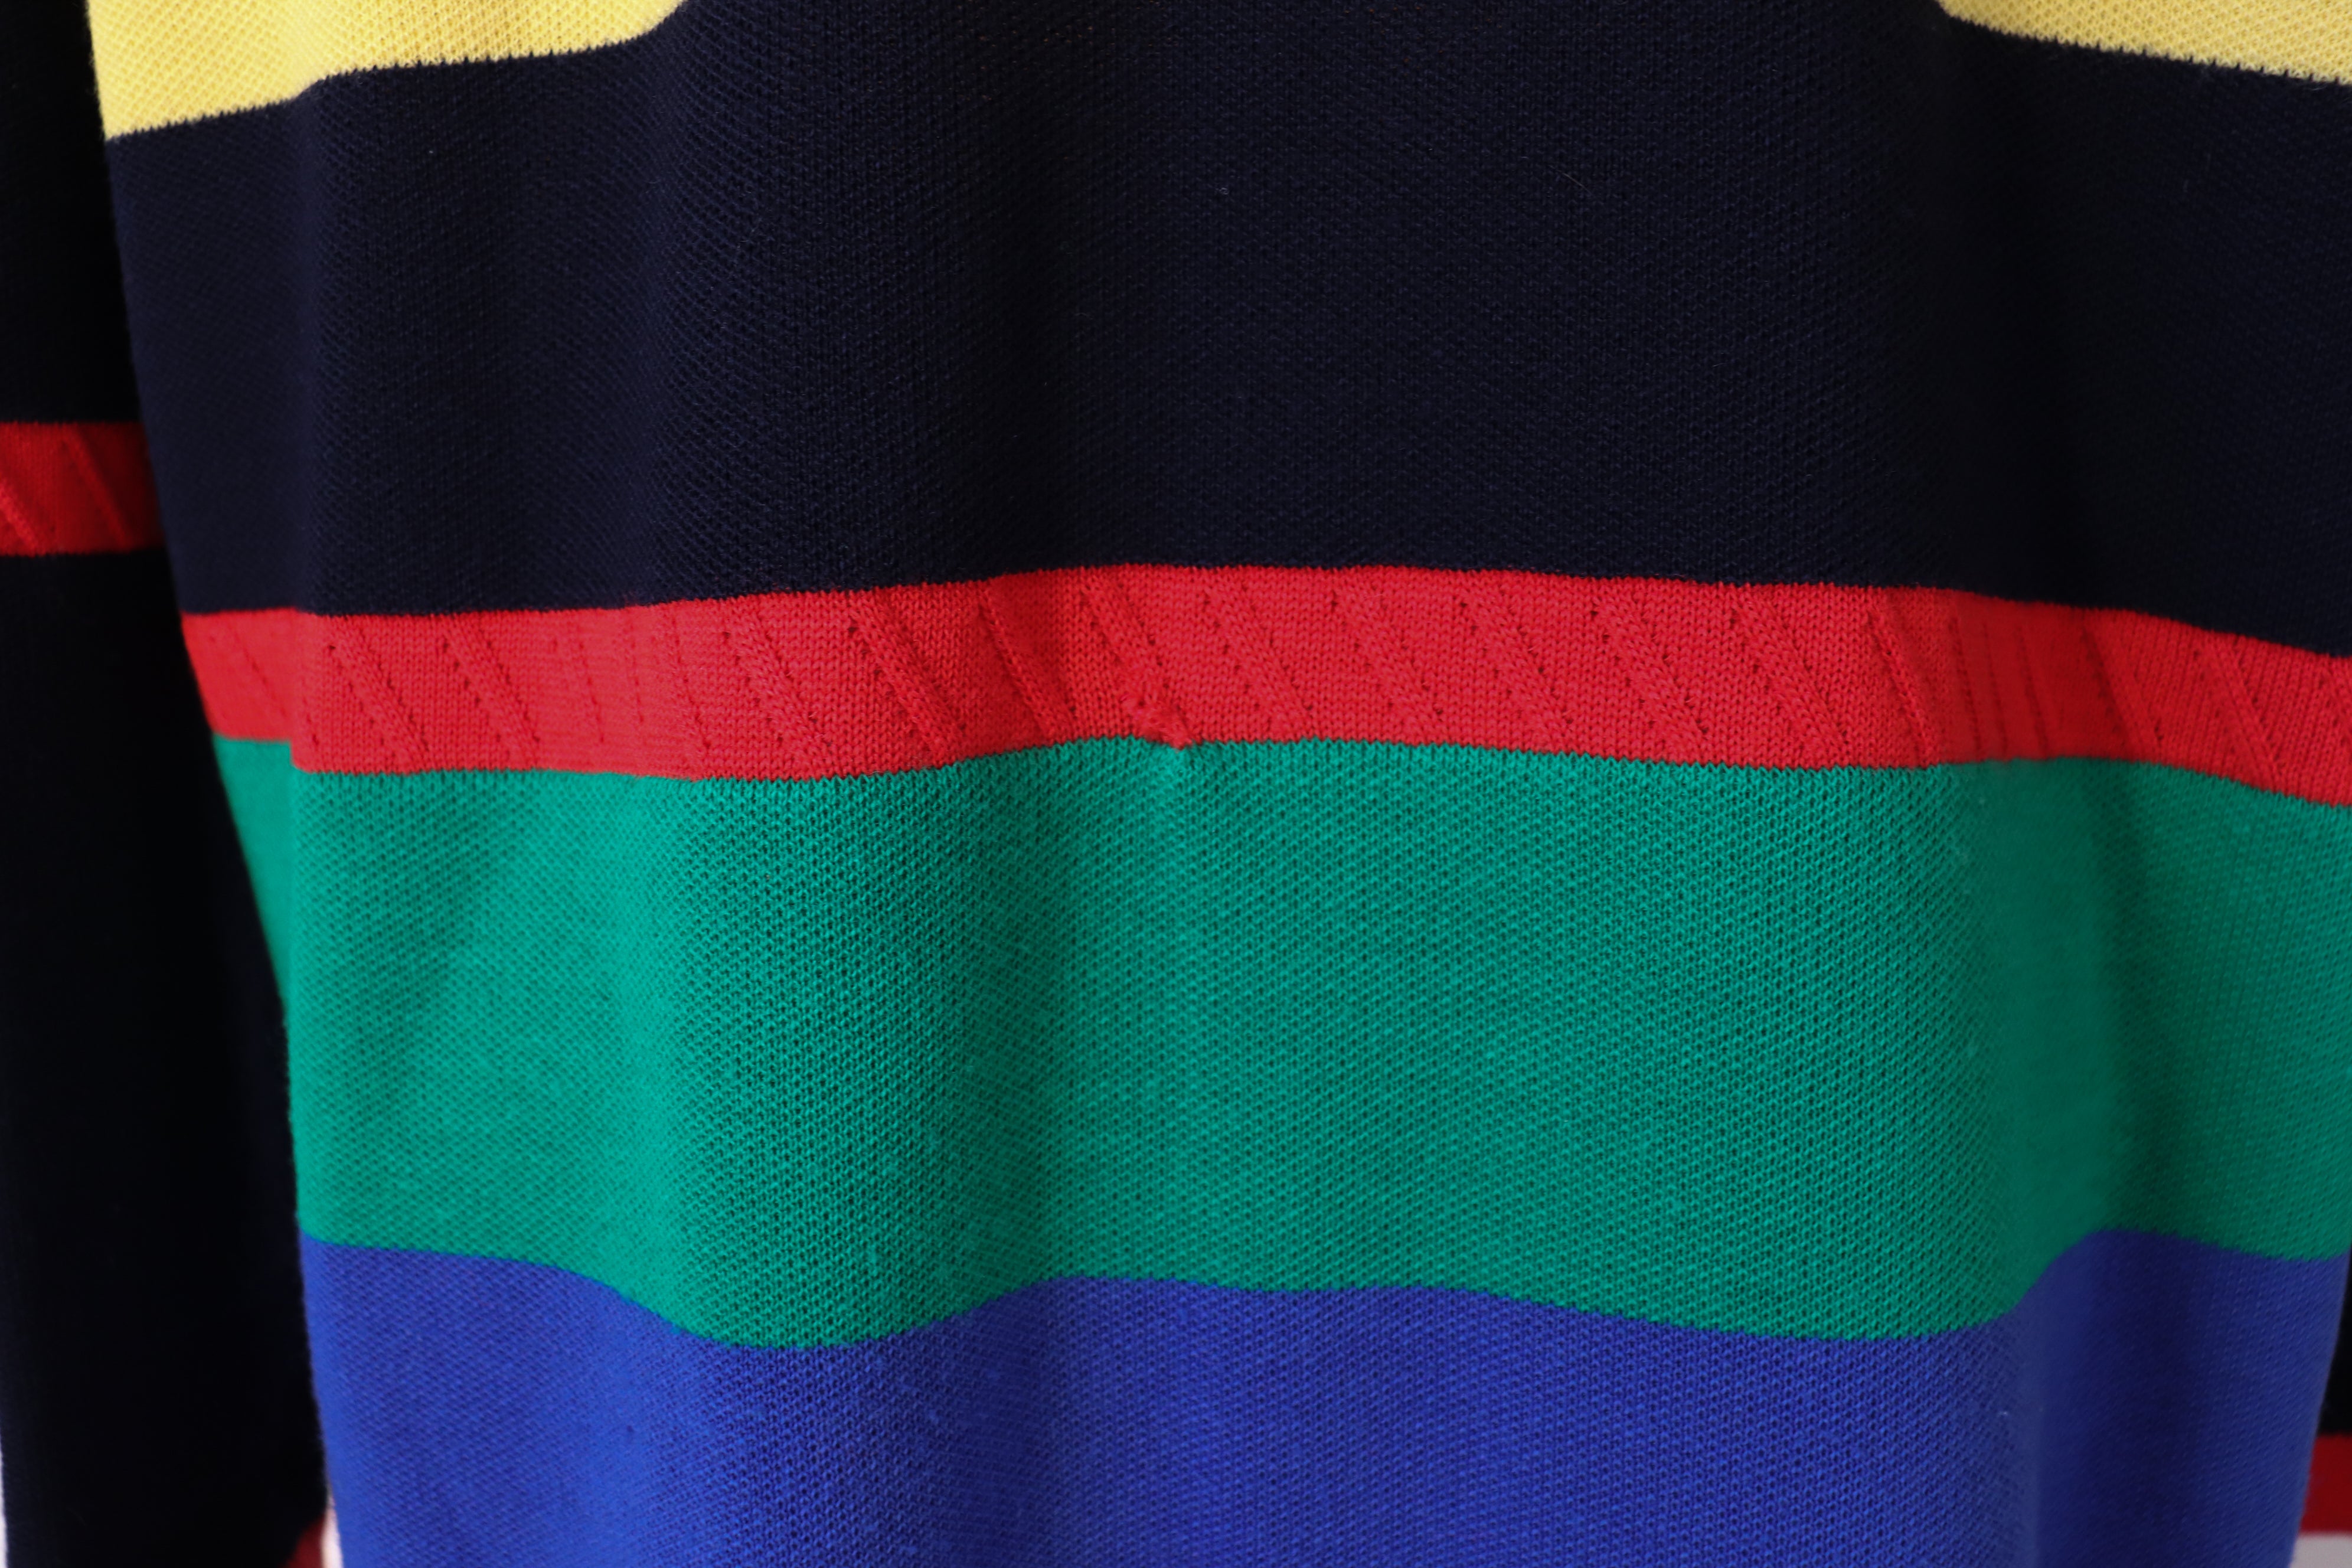 Long Vintage Cardigan - 1990s - Wool Blend - Colour Block Striped -  L / UK 14